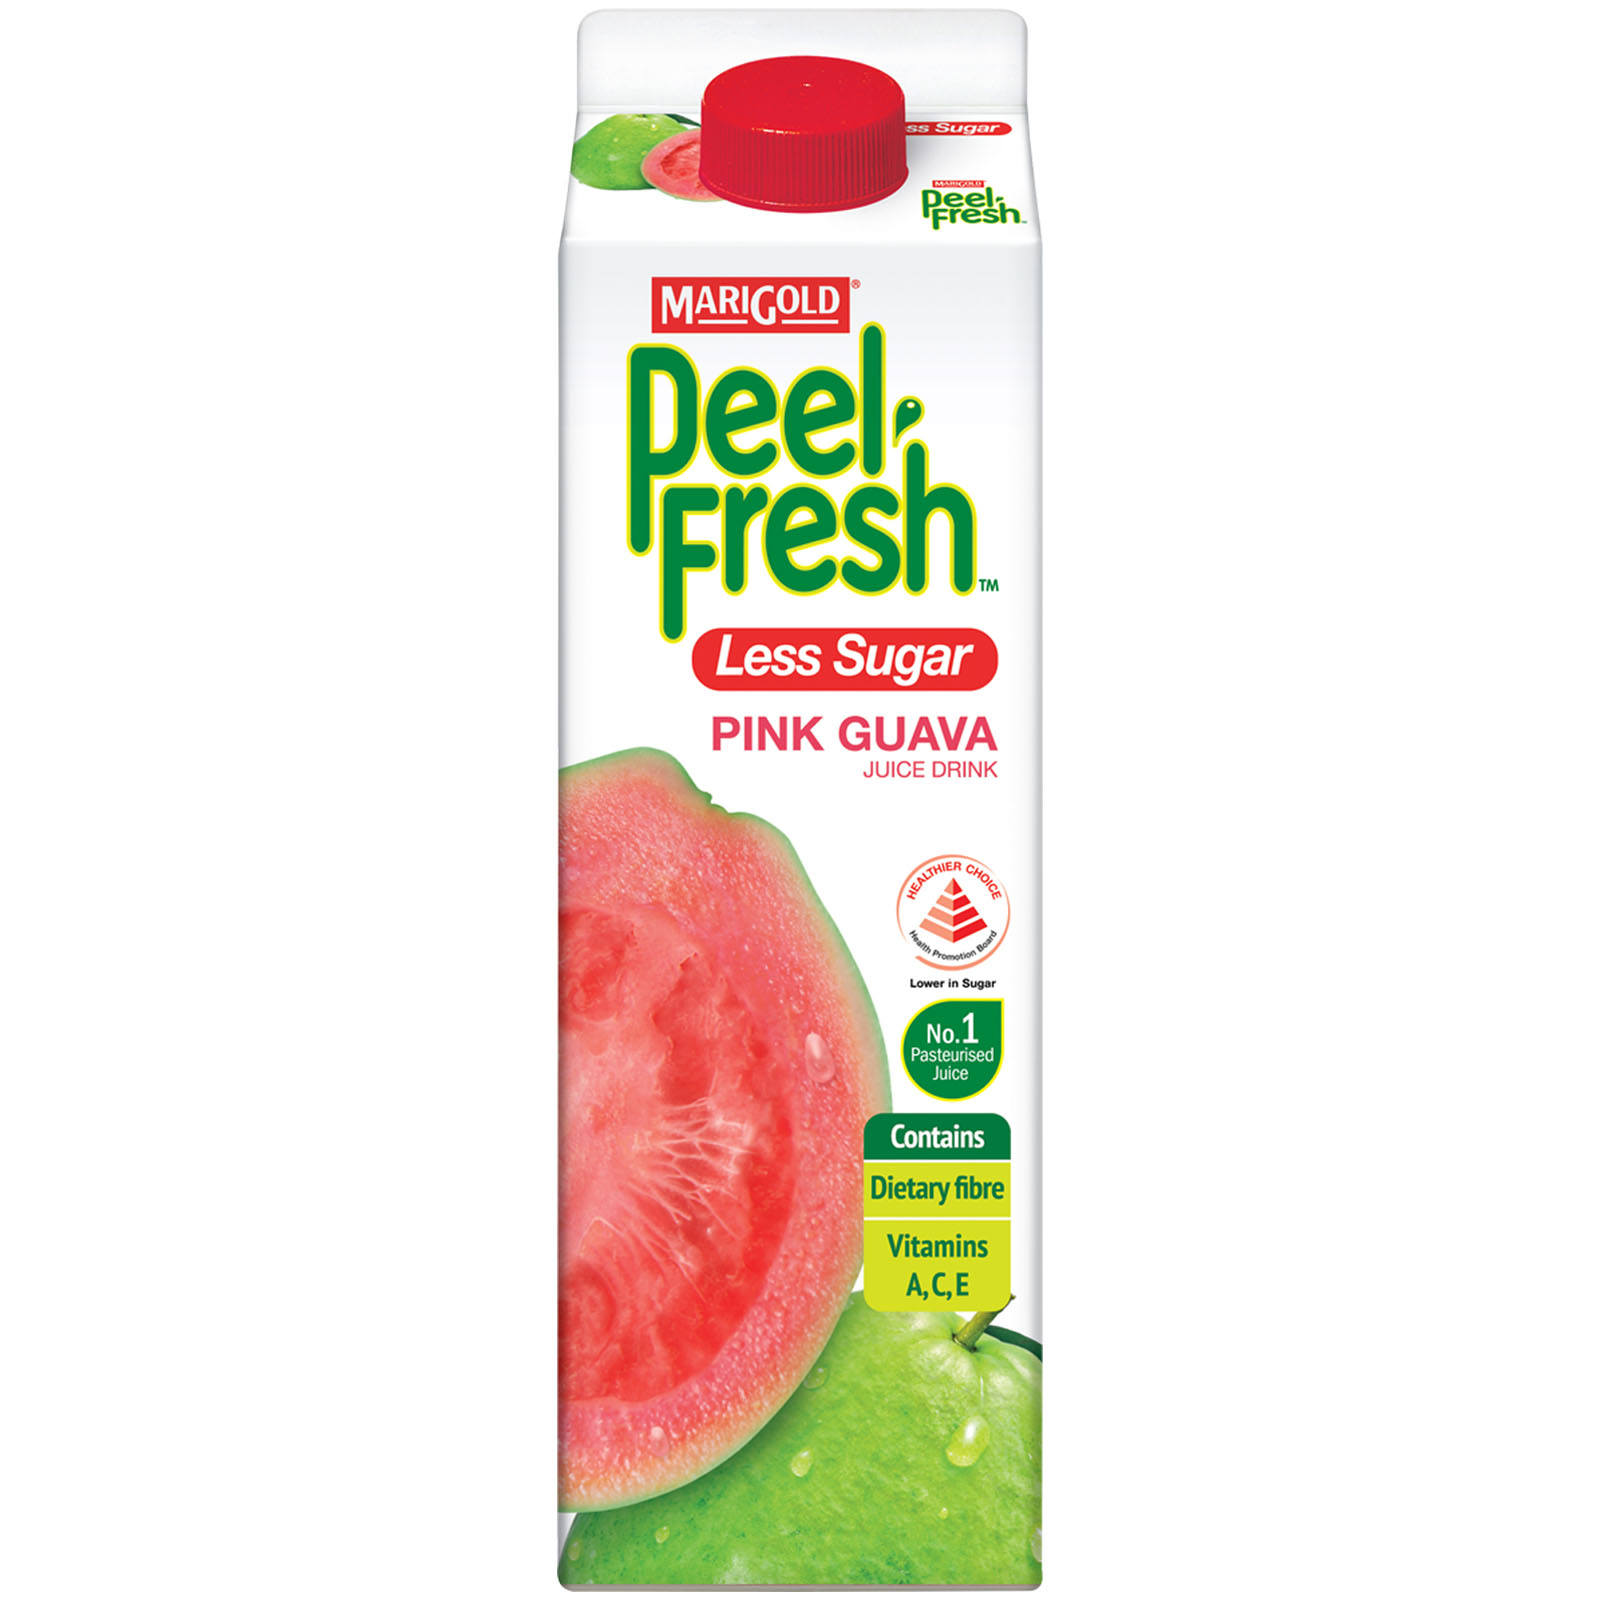 Marigold Peel Fresh Juice – Pink Guava (Less Sugar) 1L